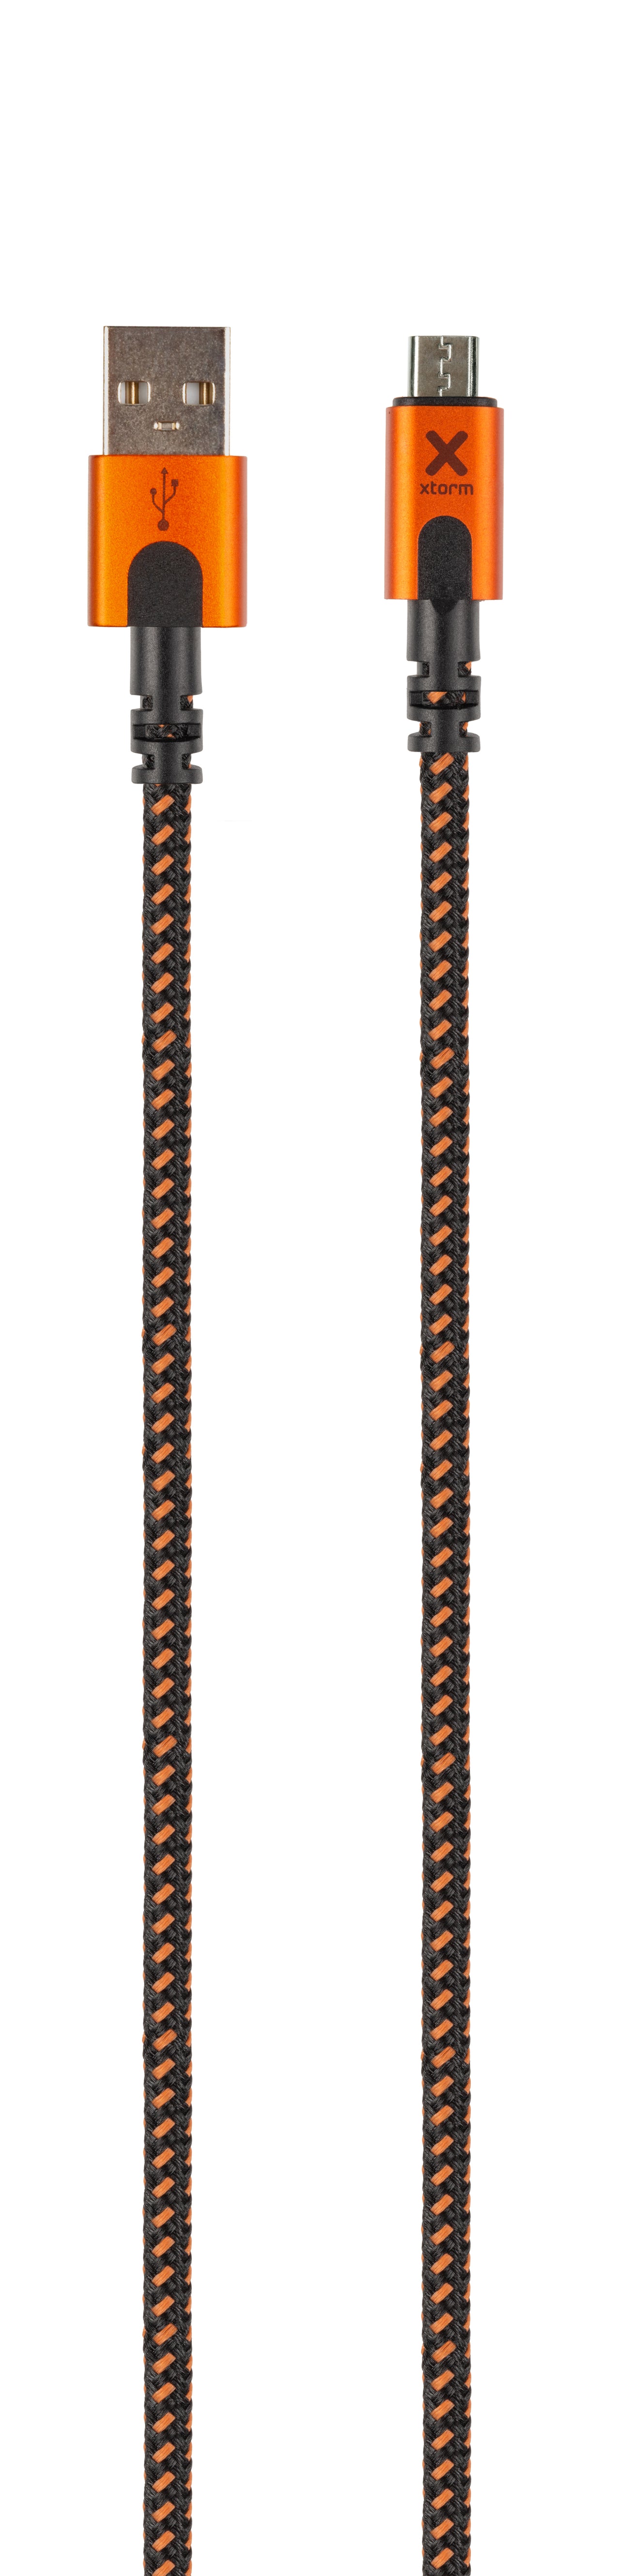 Xtreme USB auf Micro USB Kabel - 1.5 Meter - Schwarz/Orange